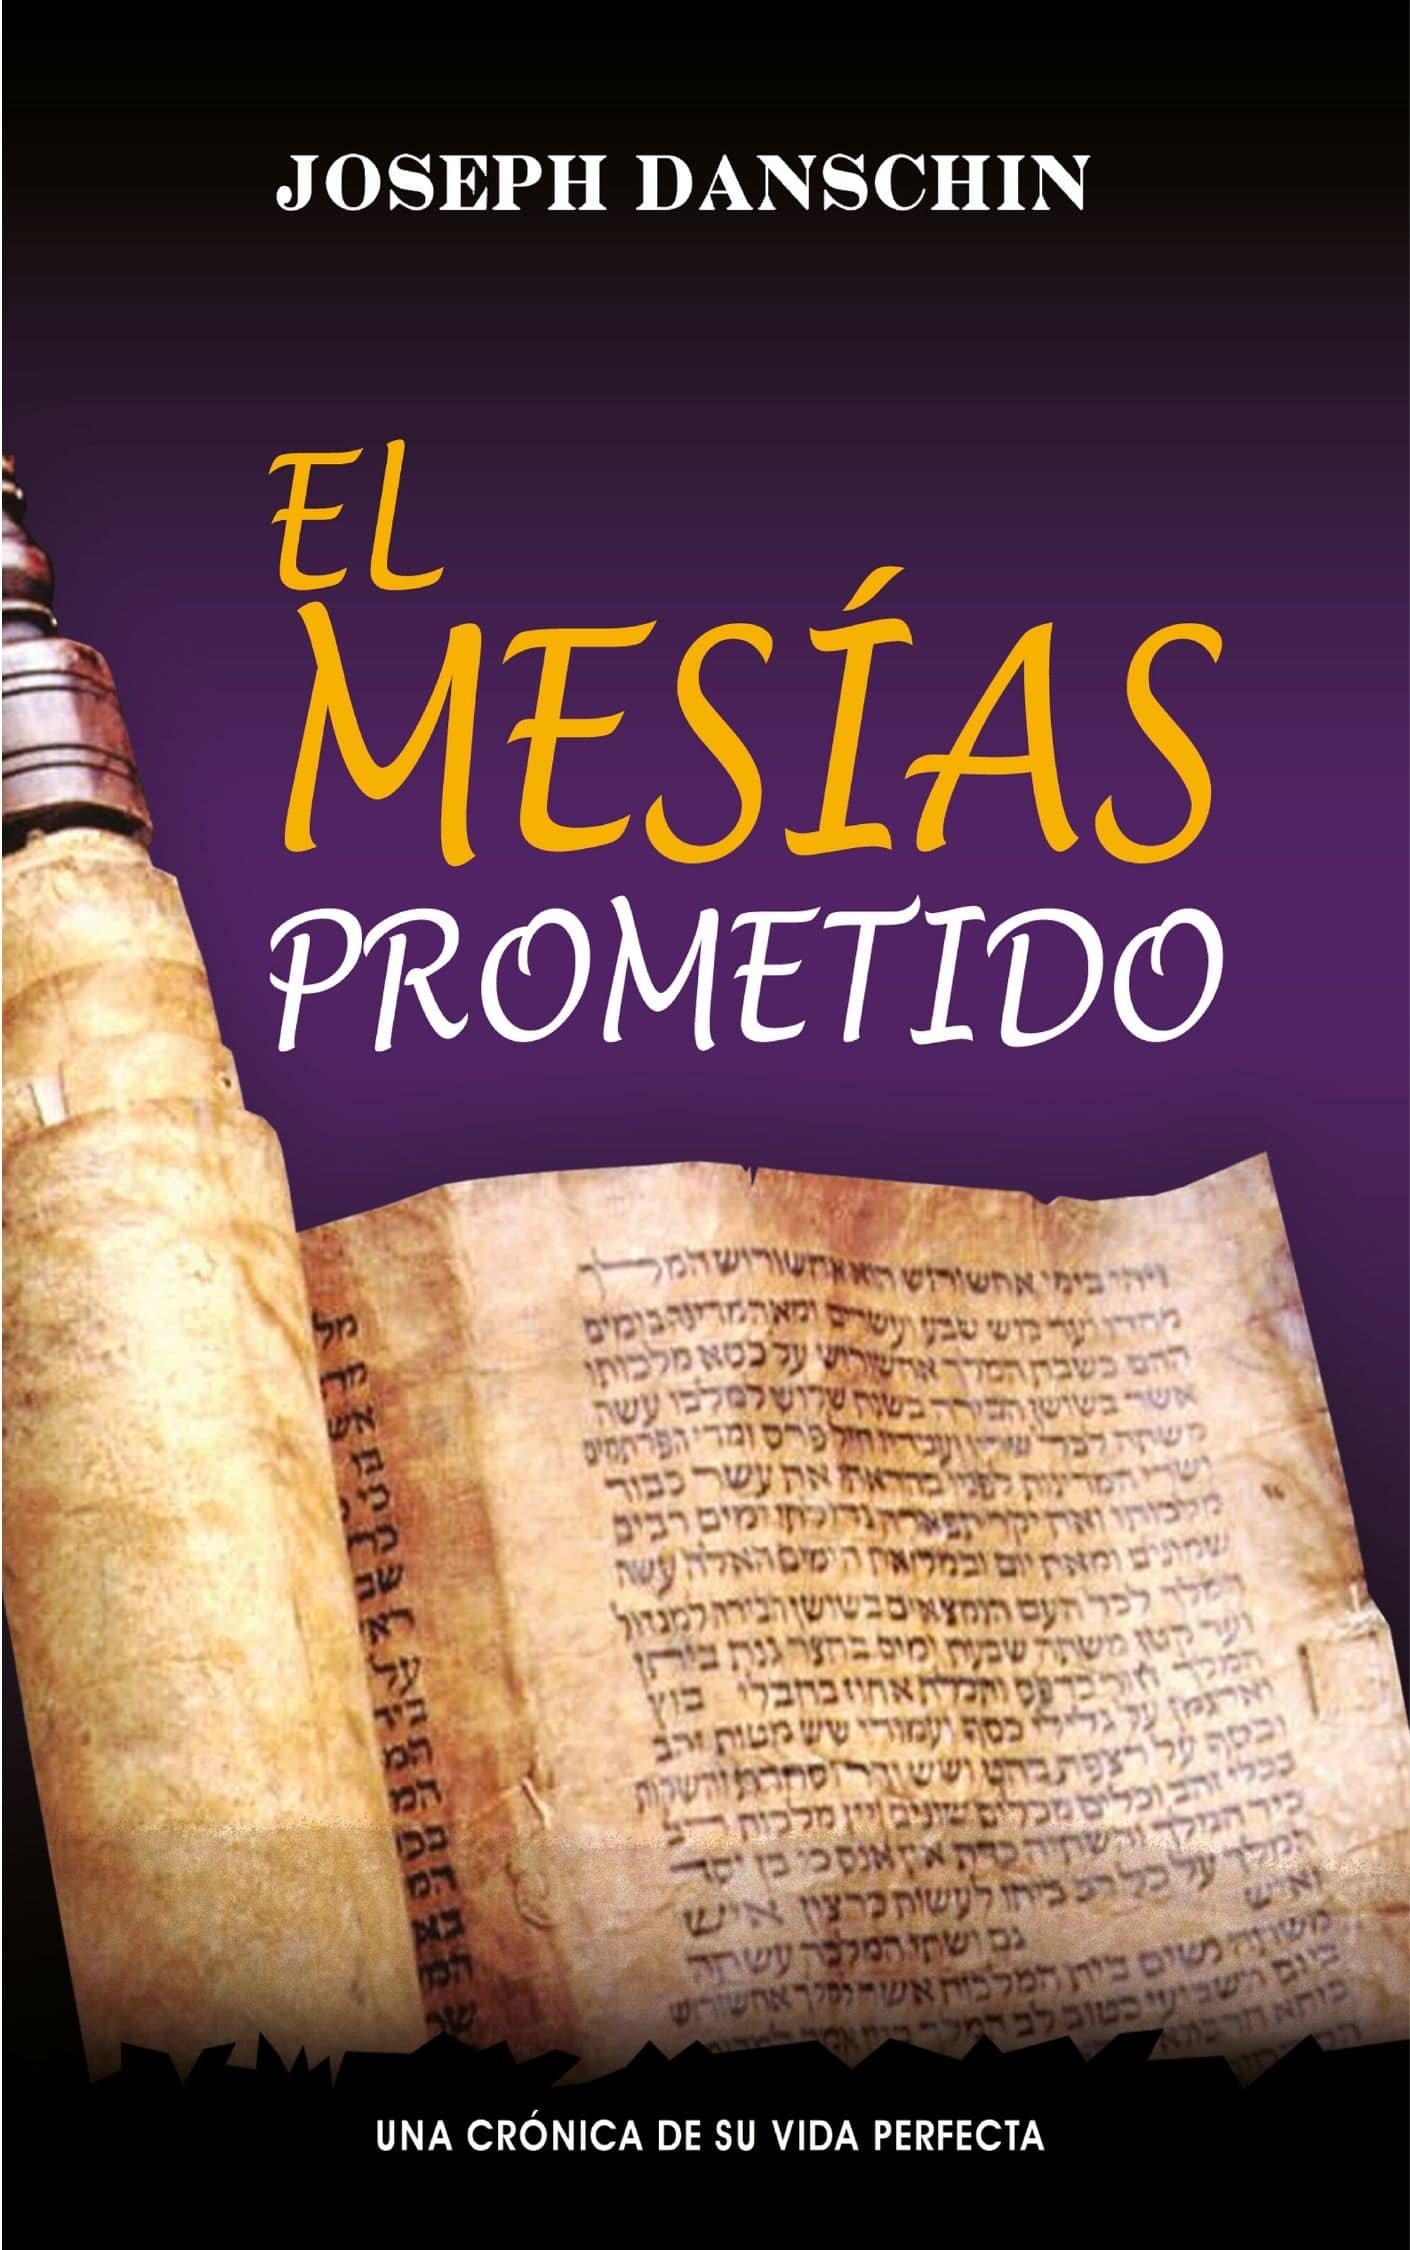 El mesías prometido JOSEPH DANSCHIN